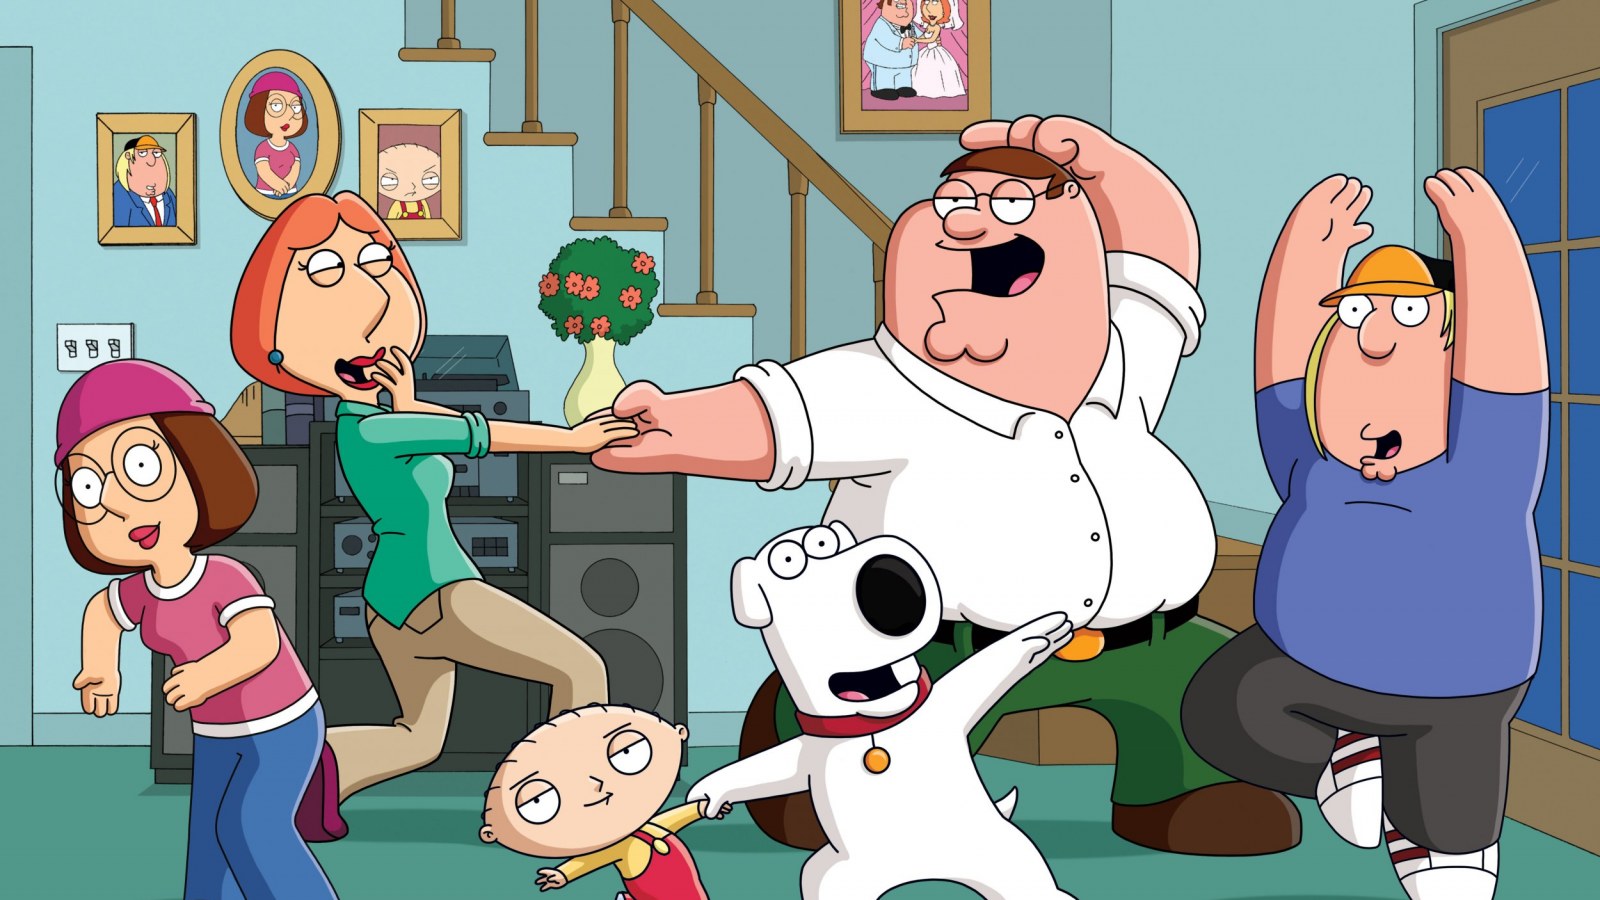 #Family Guy: Seasons 22 & 23; FOX Comedy Series Renewed Through 2024-25